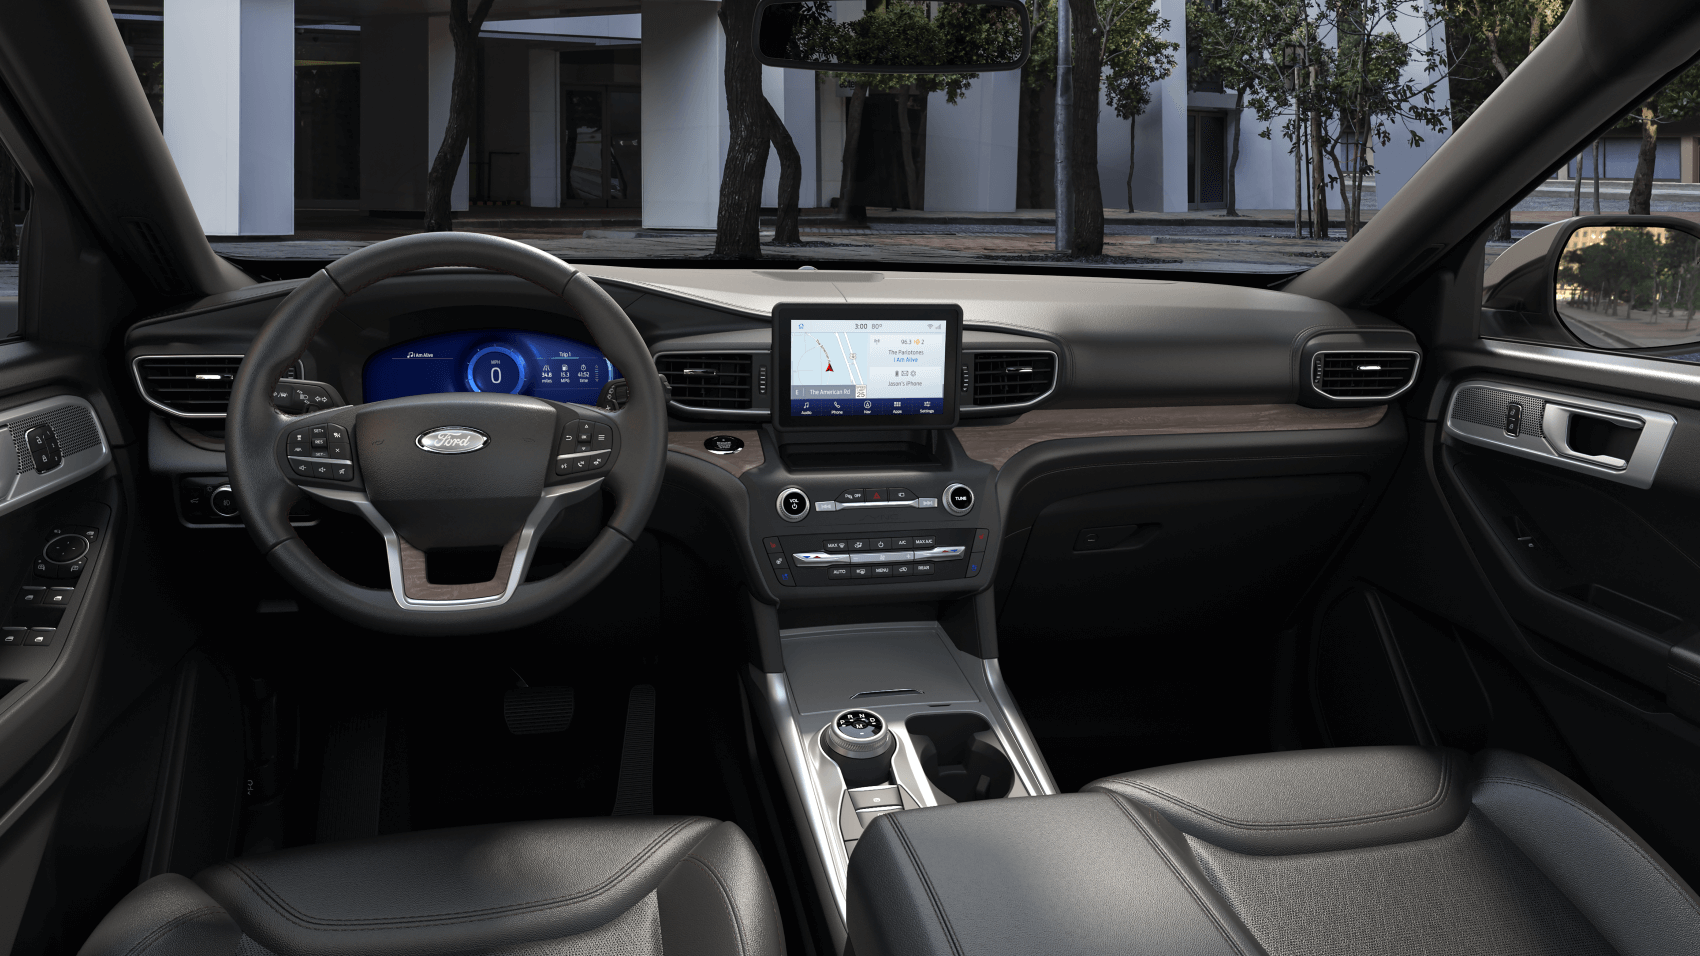 2021 Ford Explorer Interior Dashboard Tech